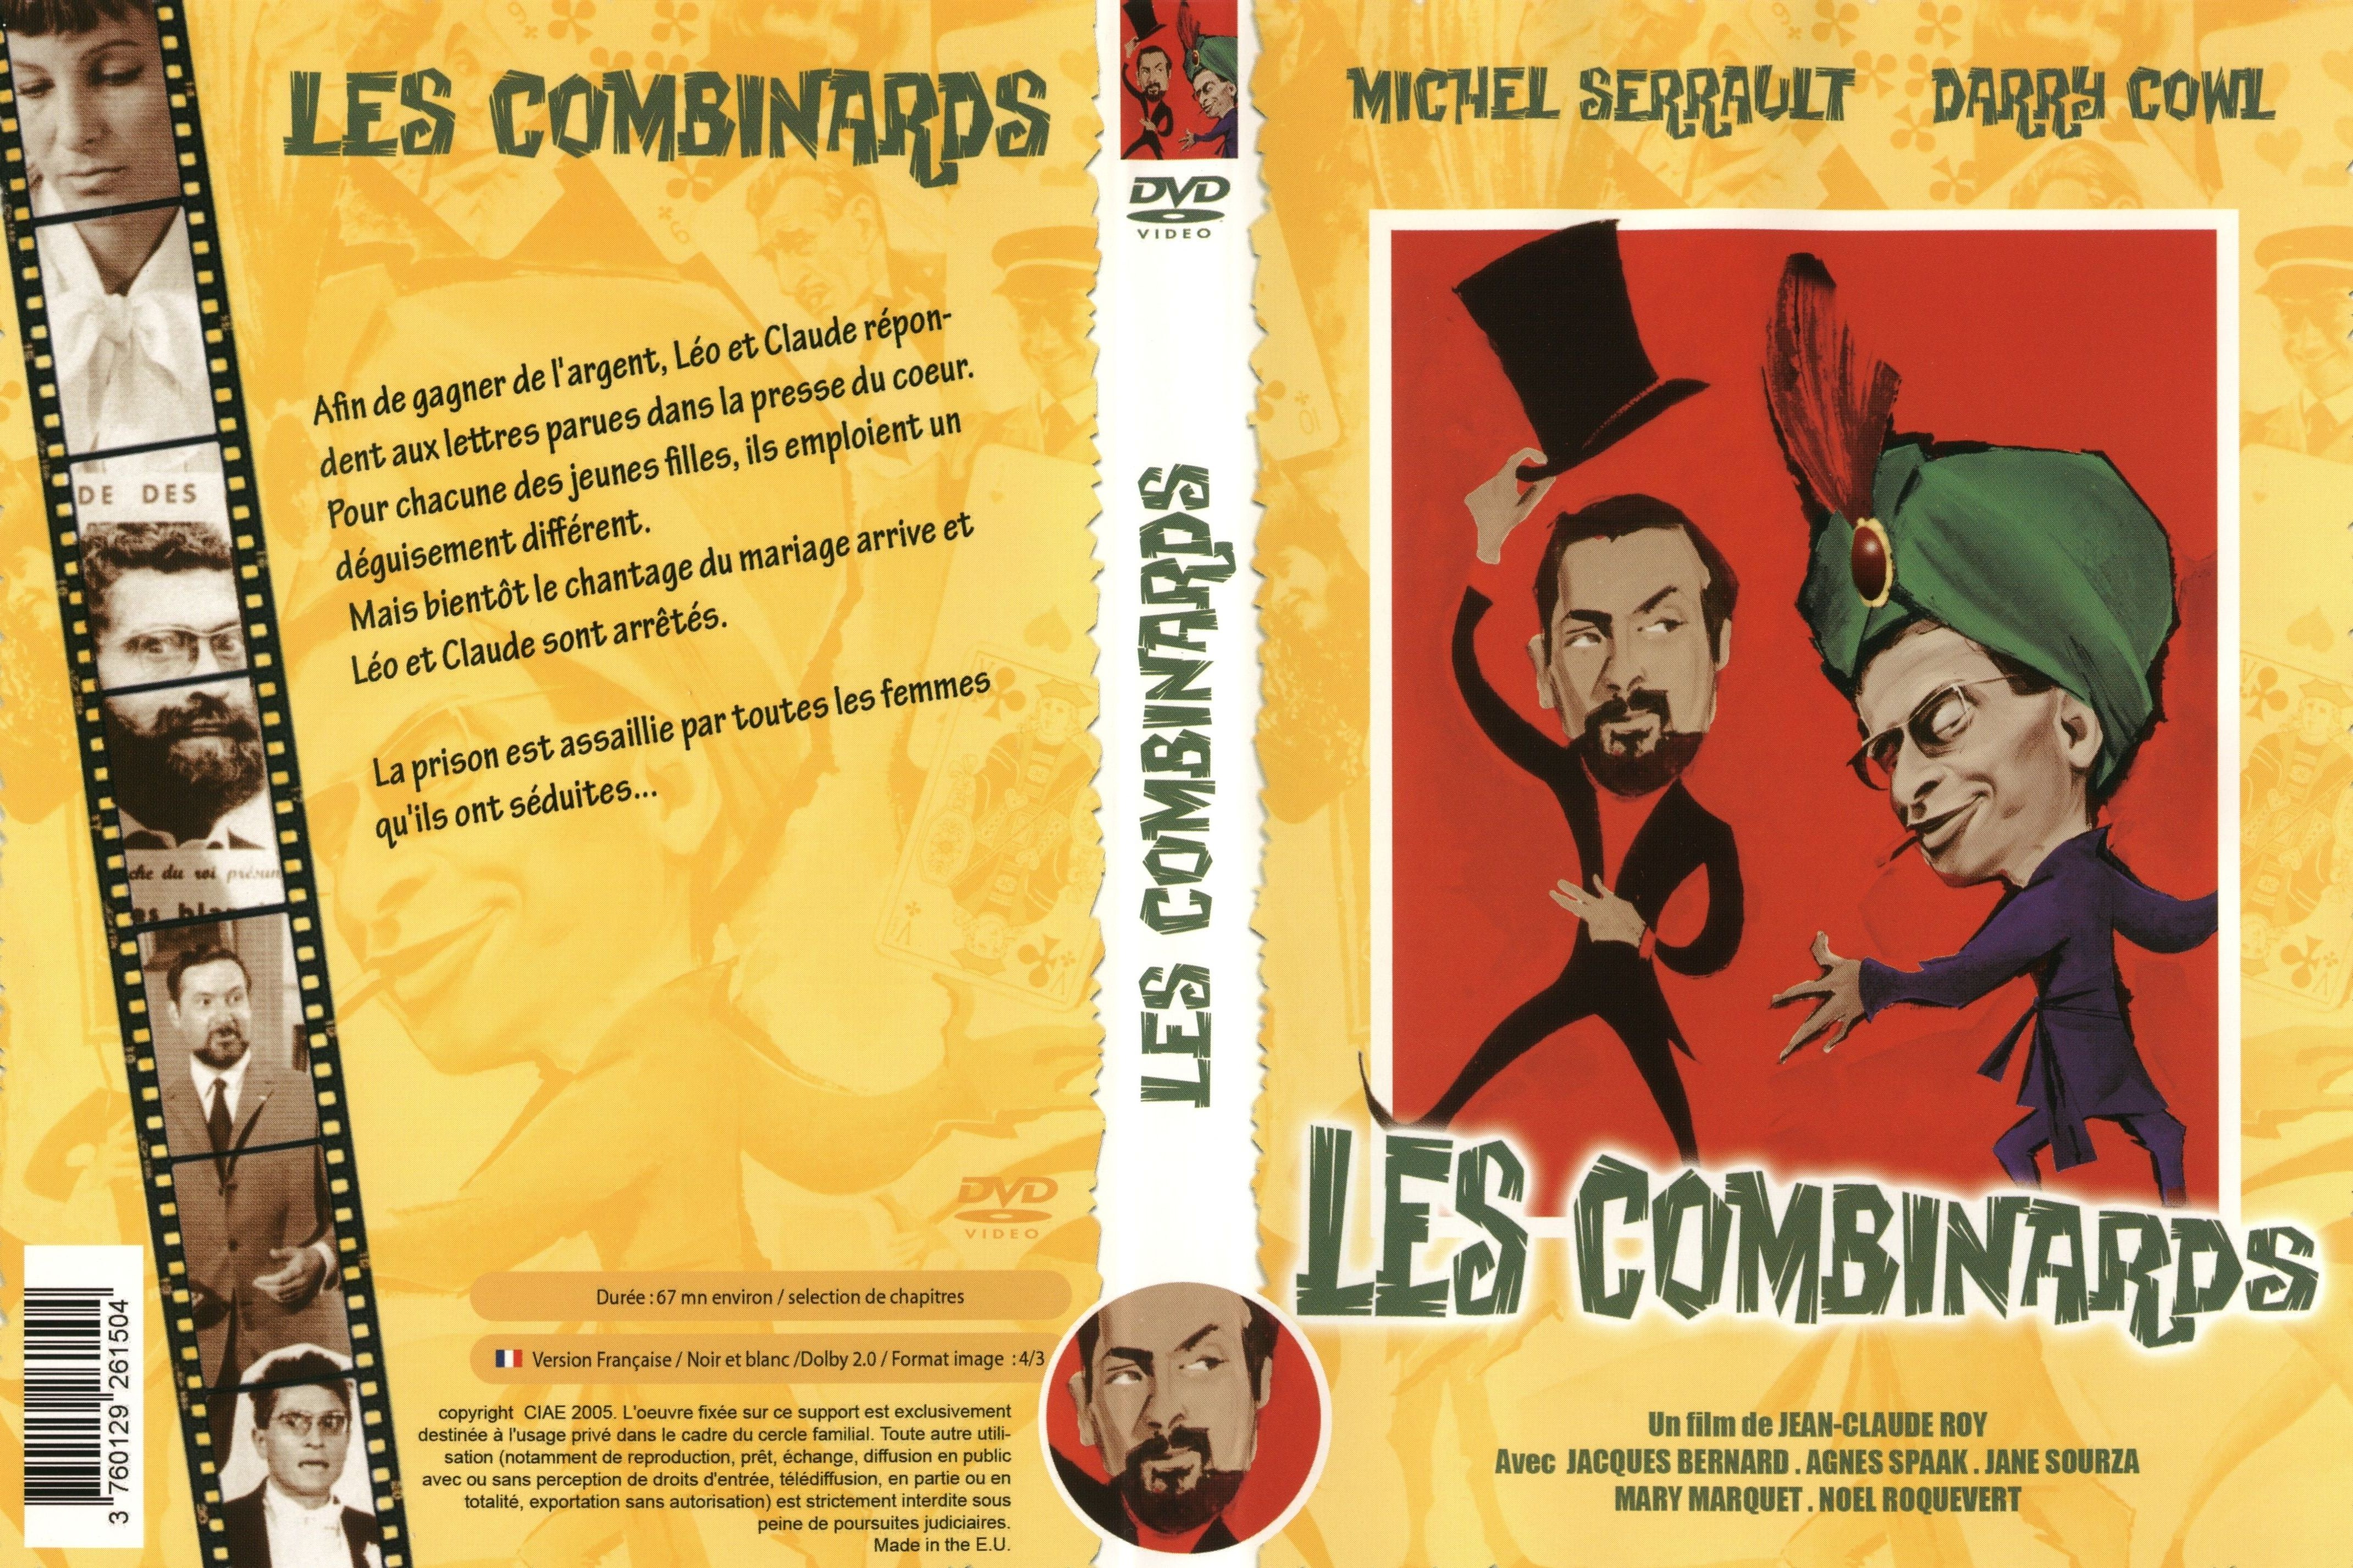 Jaquette DVD Les combinards v2